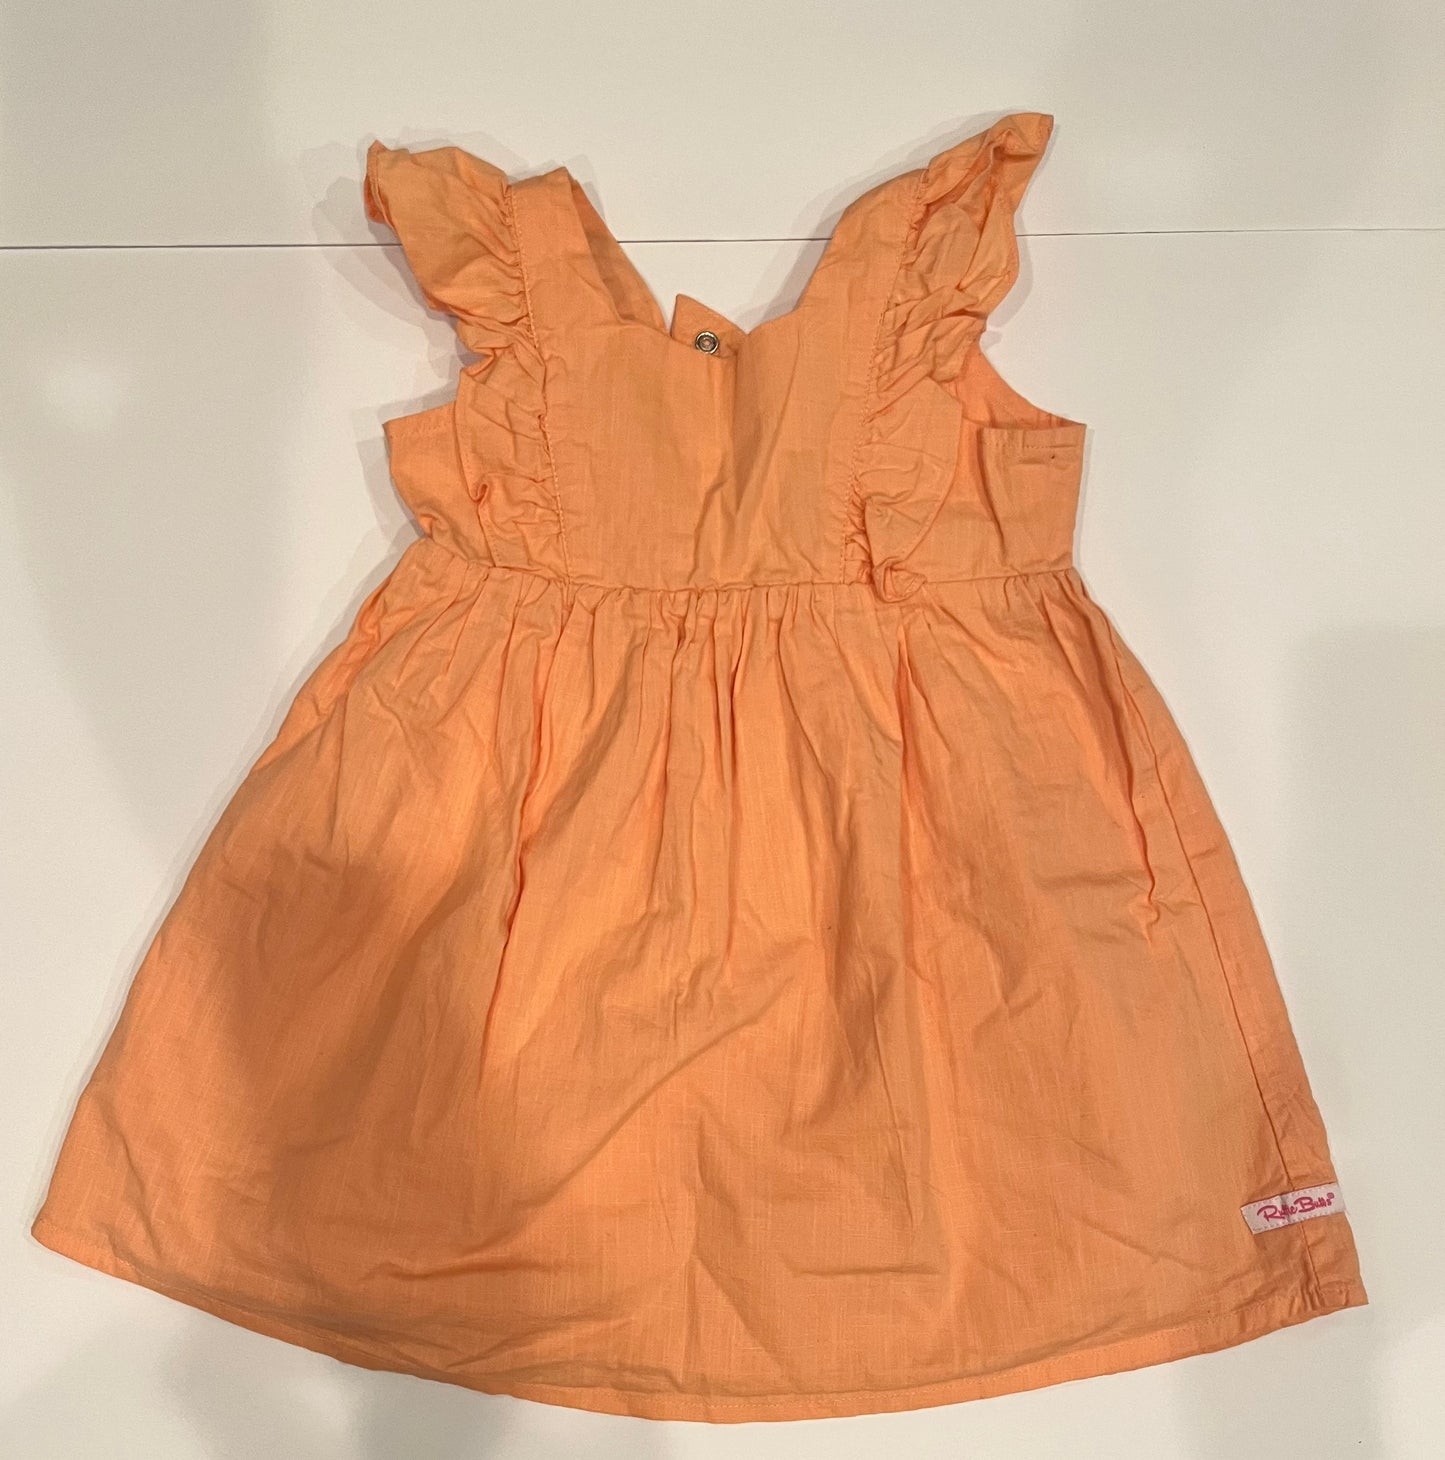 Ruffle Butts orange 3t dress REDUCED